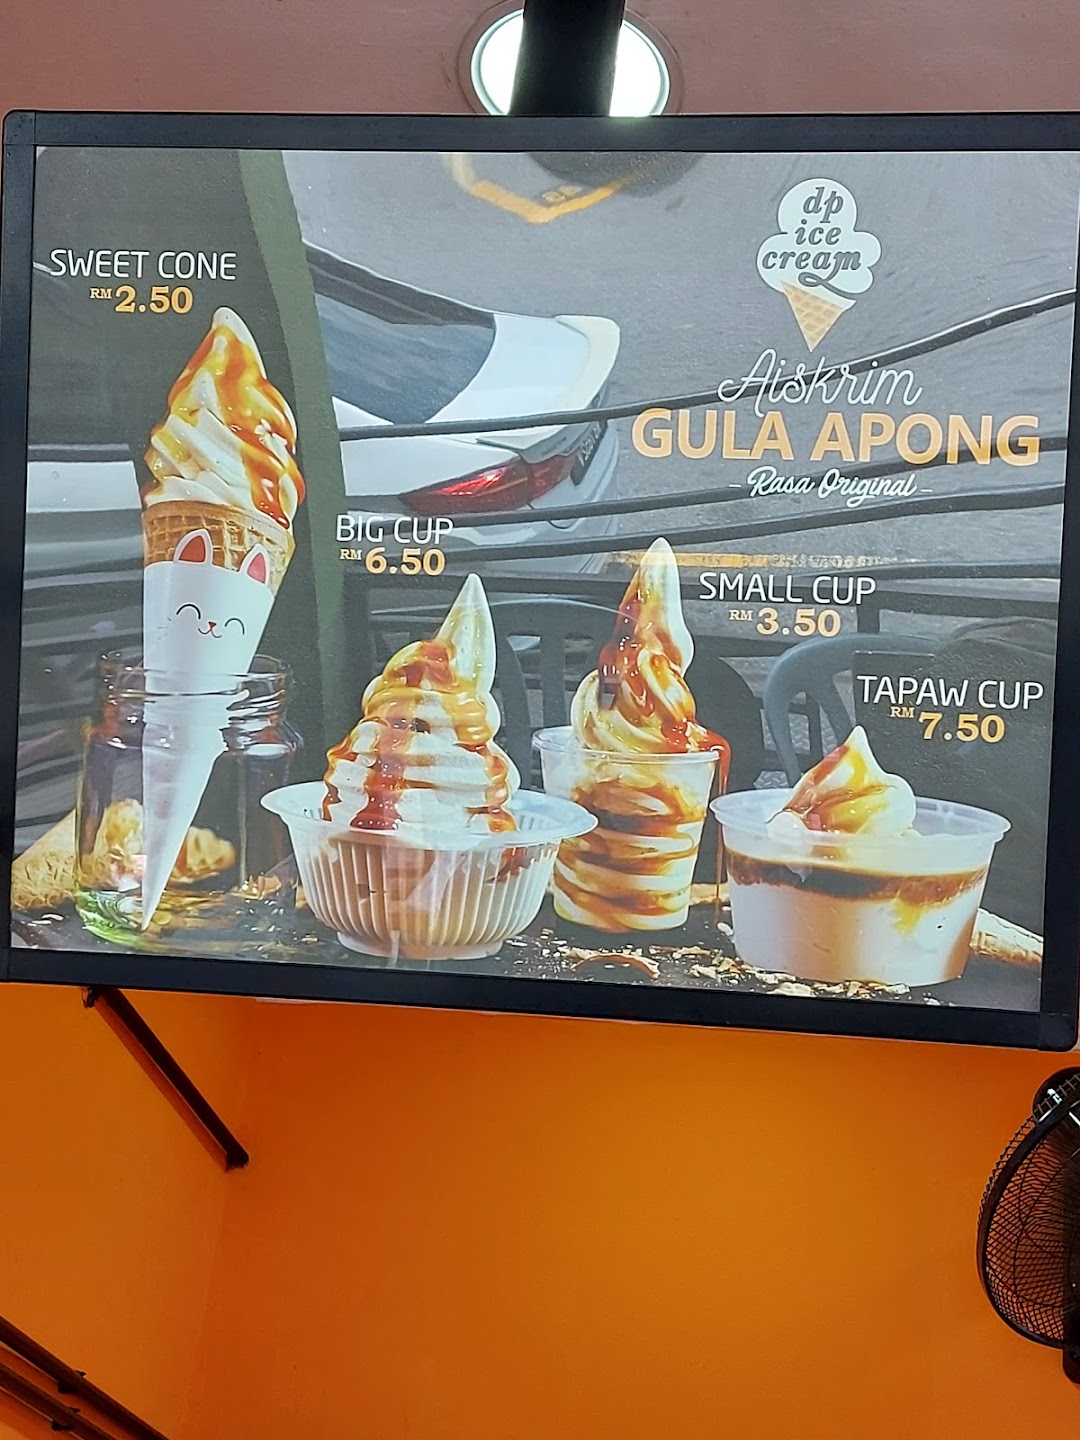 DP Ice Cream Gula Apong Cawangan Sri Gombak